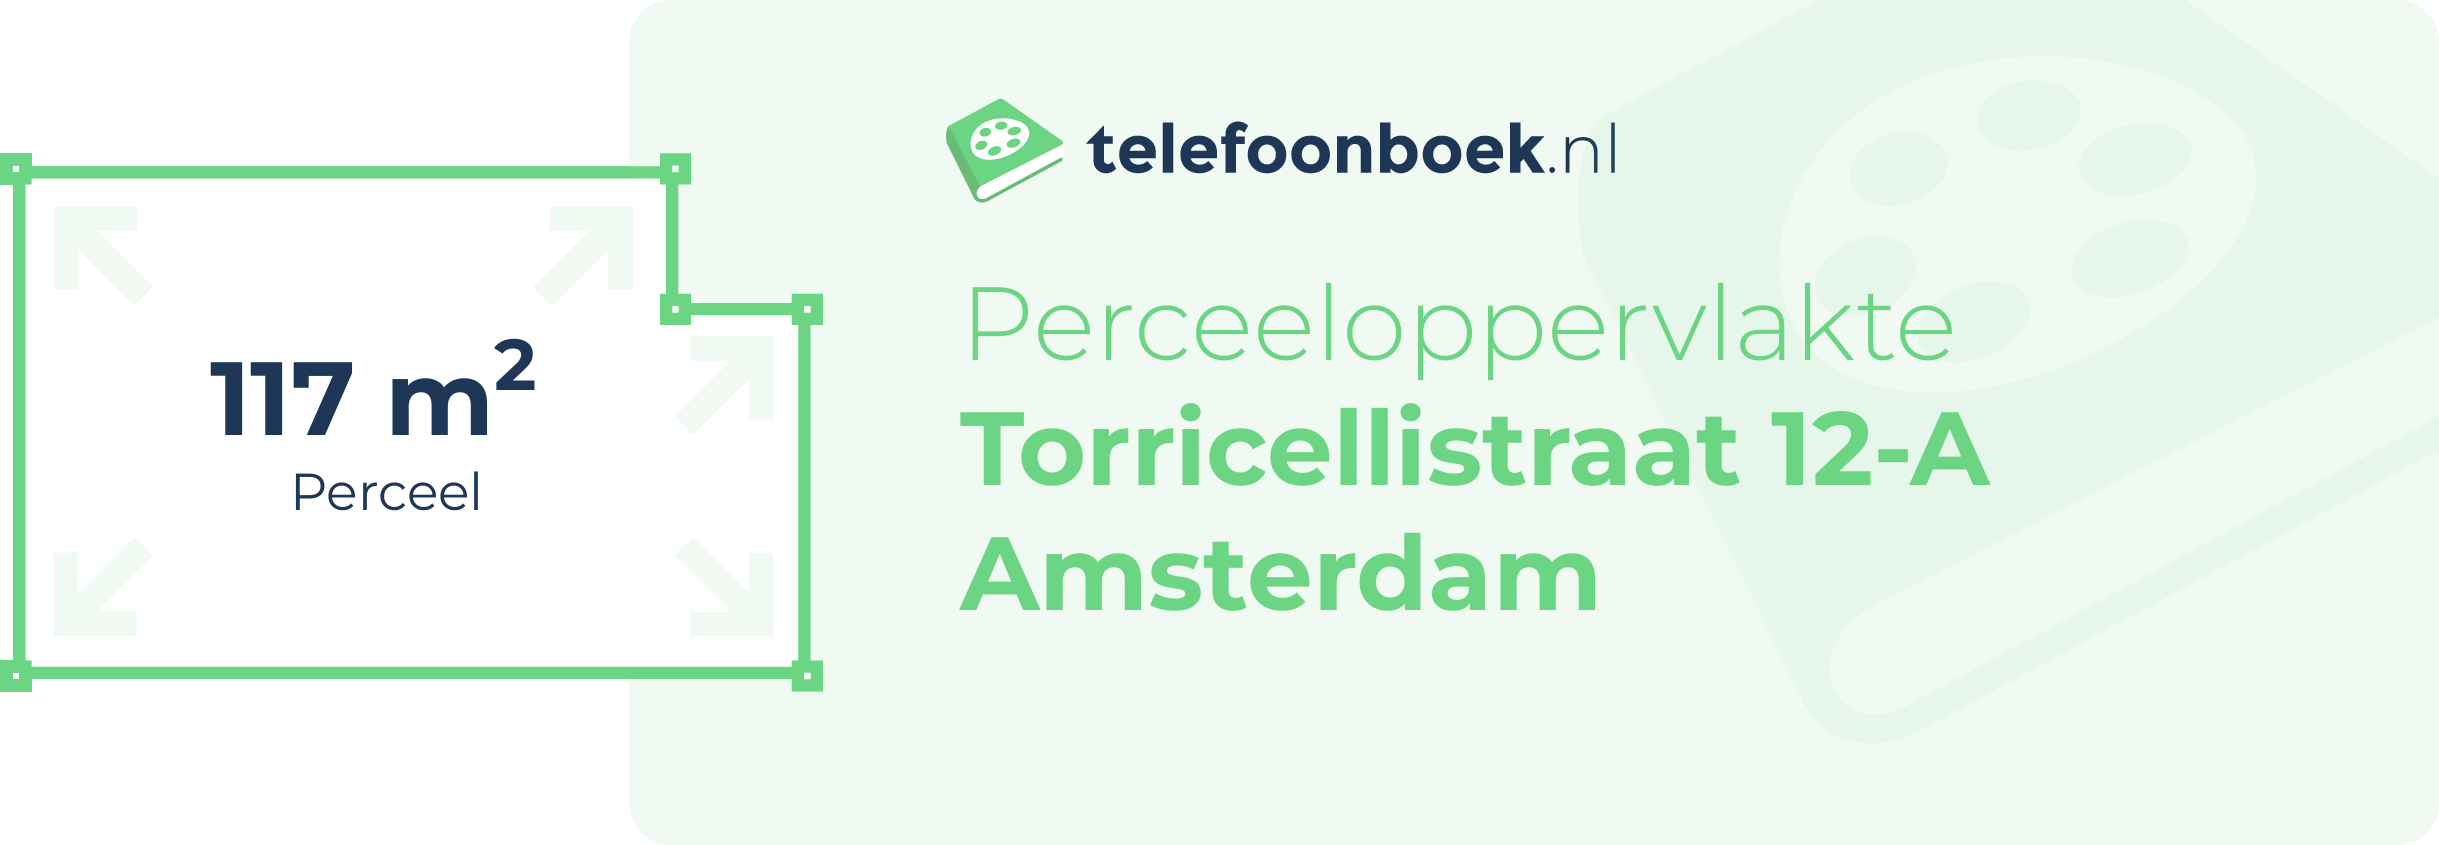 Perceeloppervlakte Torricellistraat 12-A Amsterdam